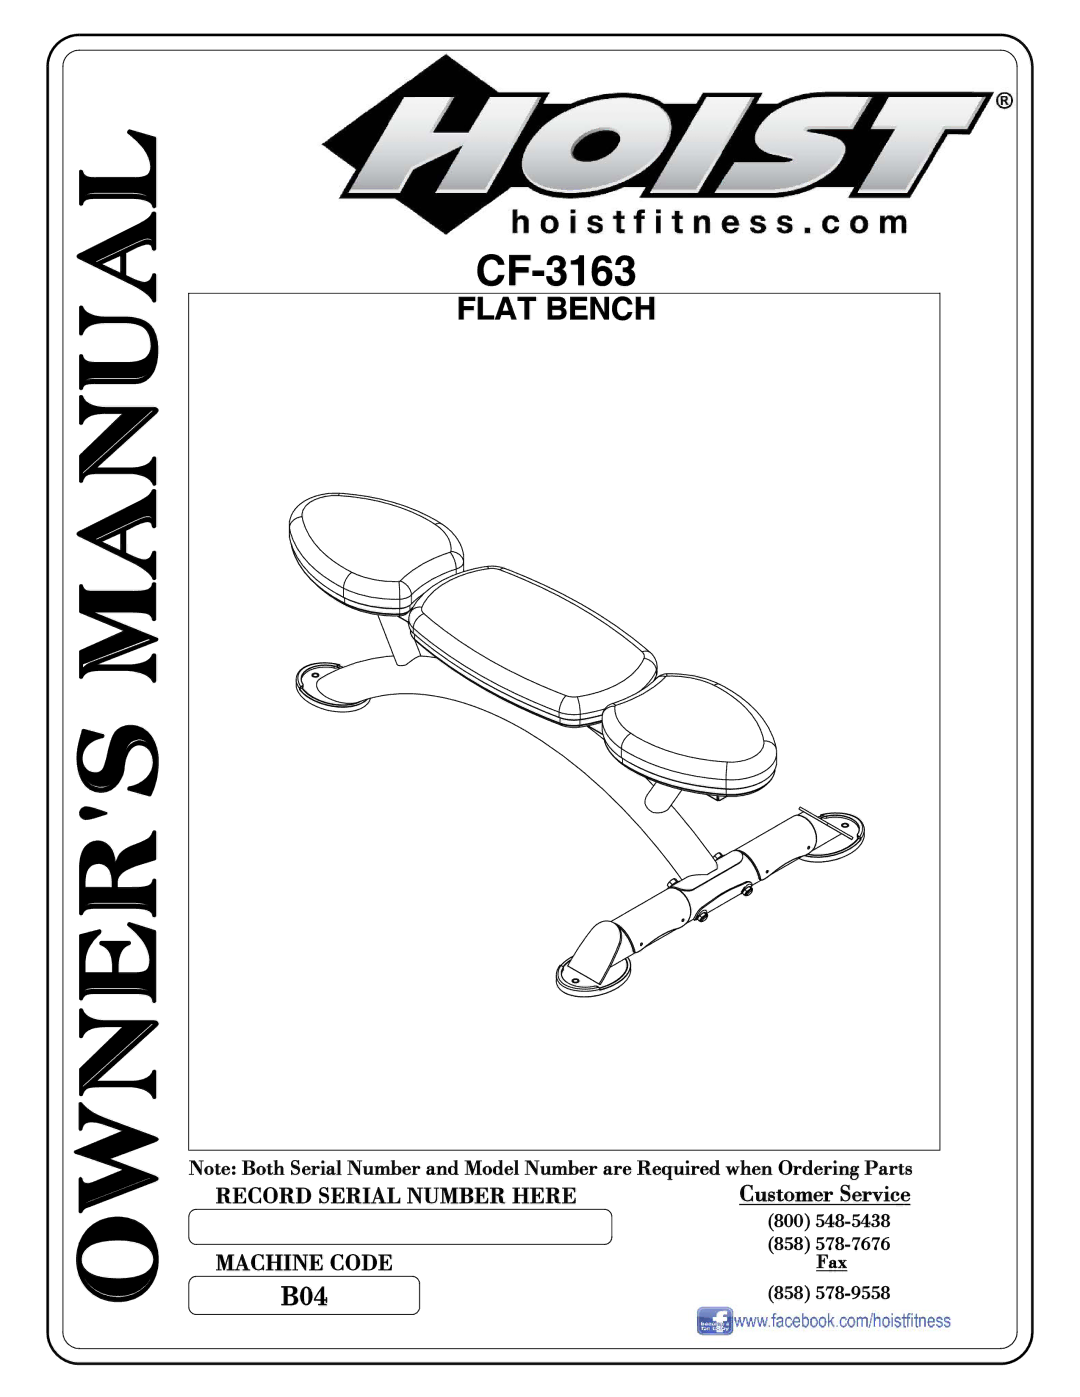 Hoist Fitness CF-3163 owner manual Flat Bench 